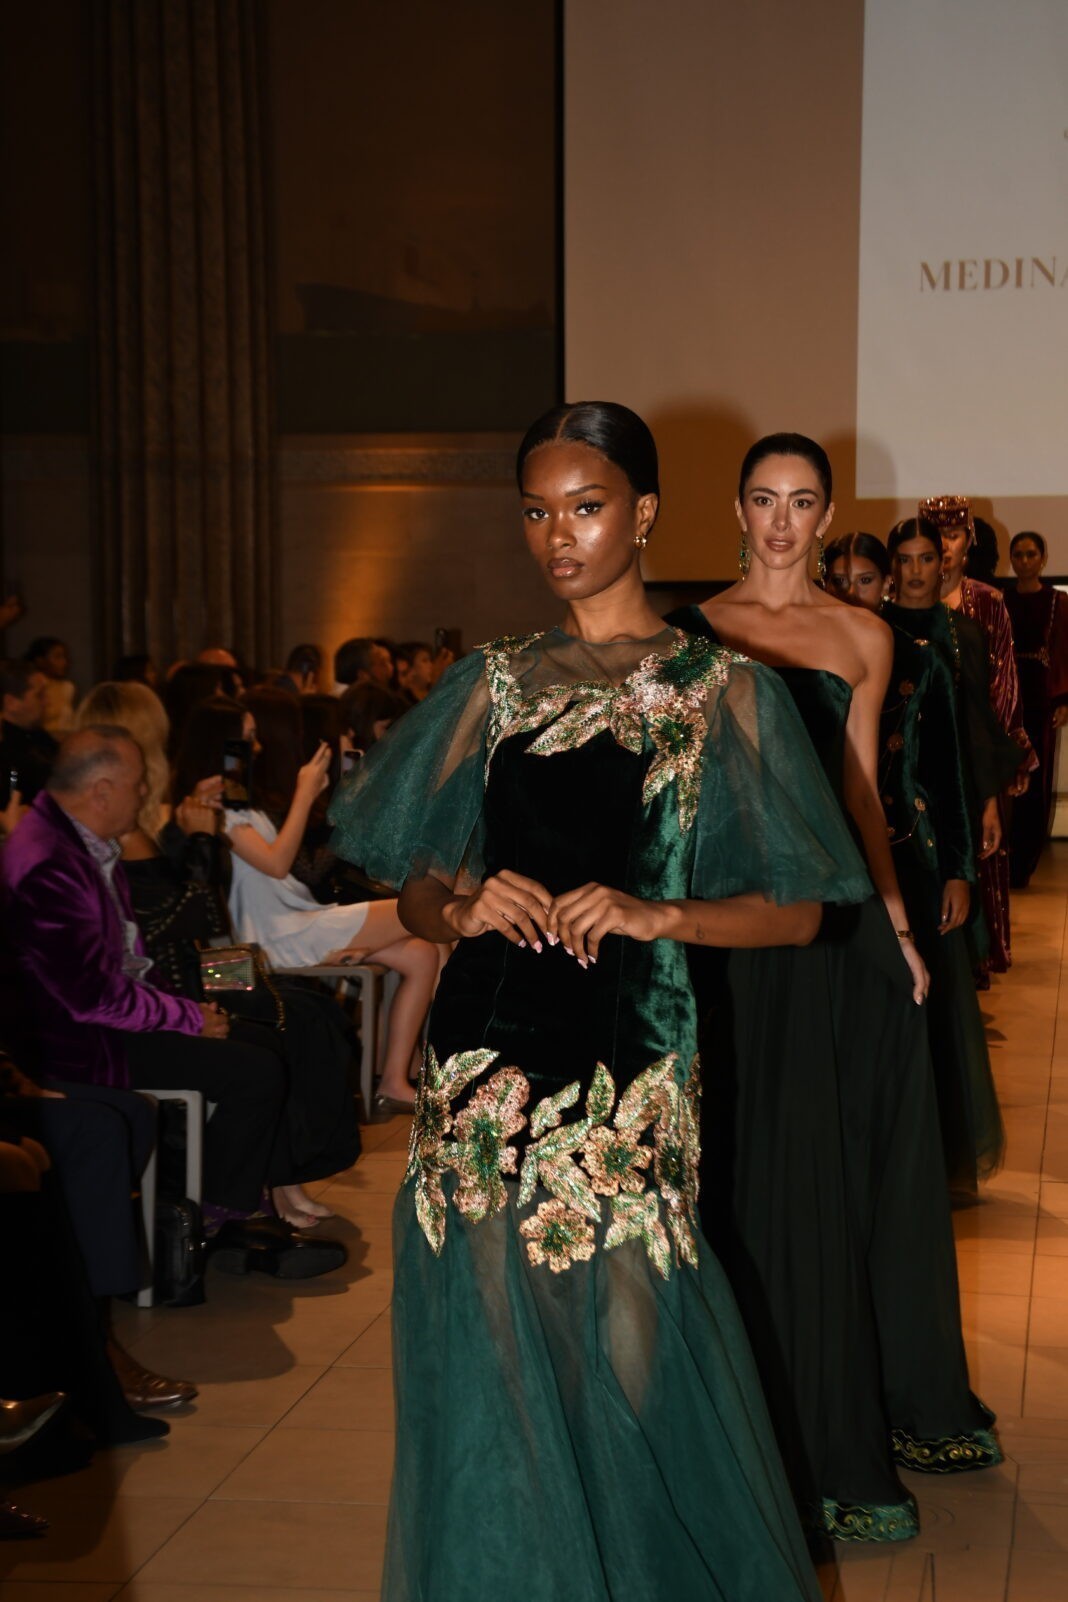 Kazakhstani fashion designers conquered America at New York Fashion Week